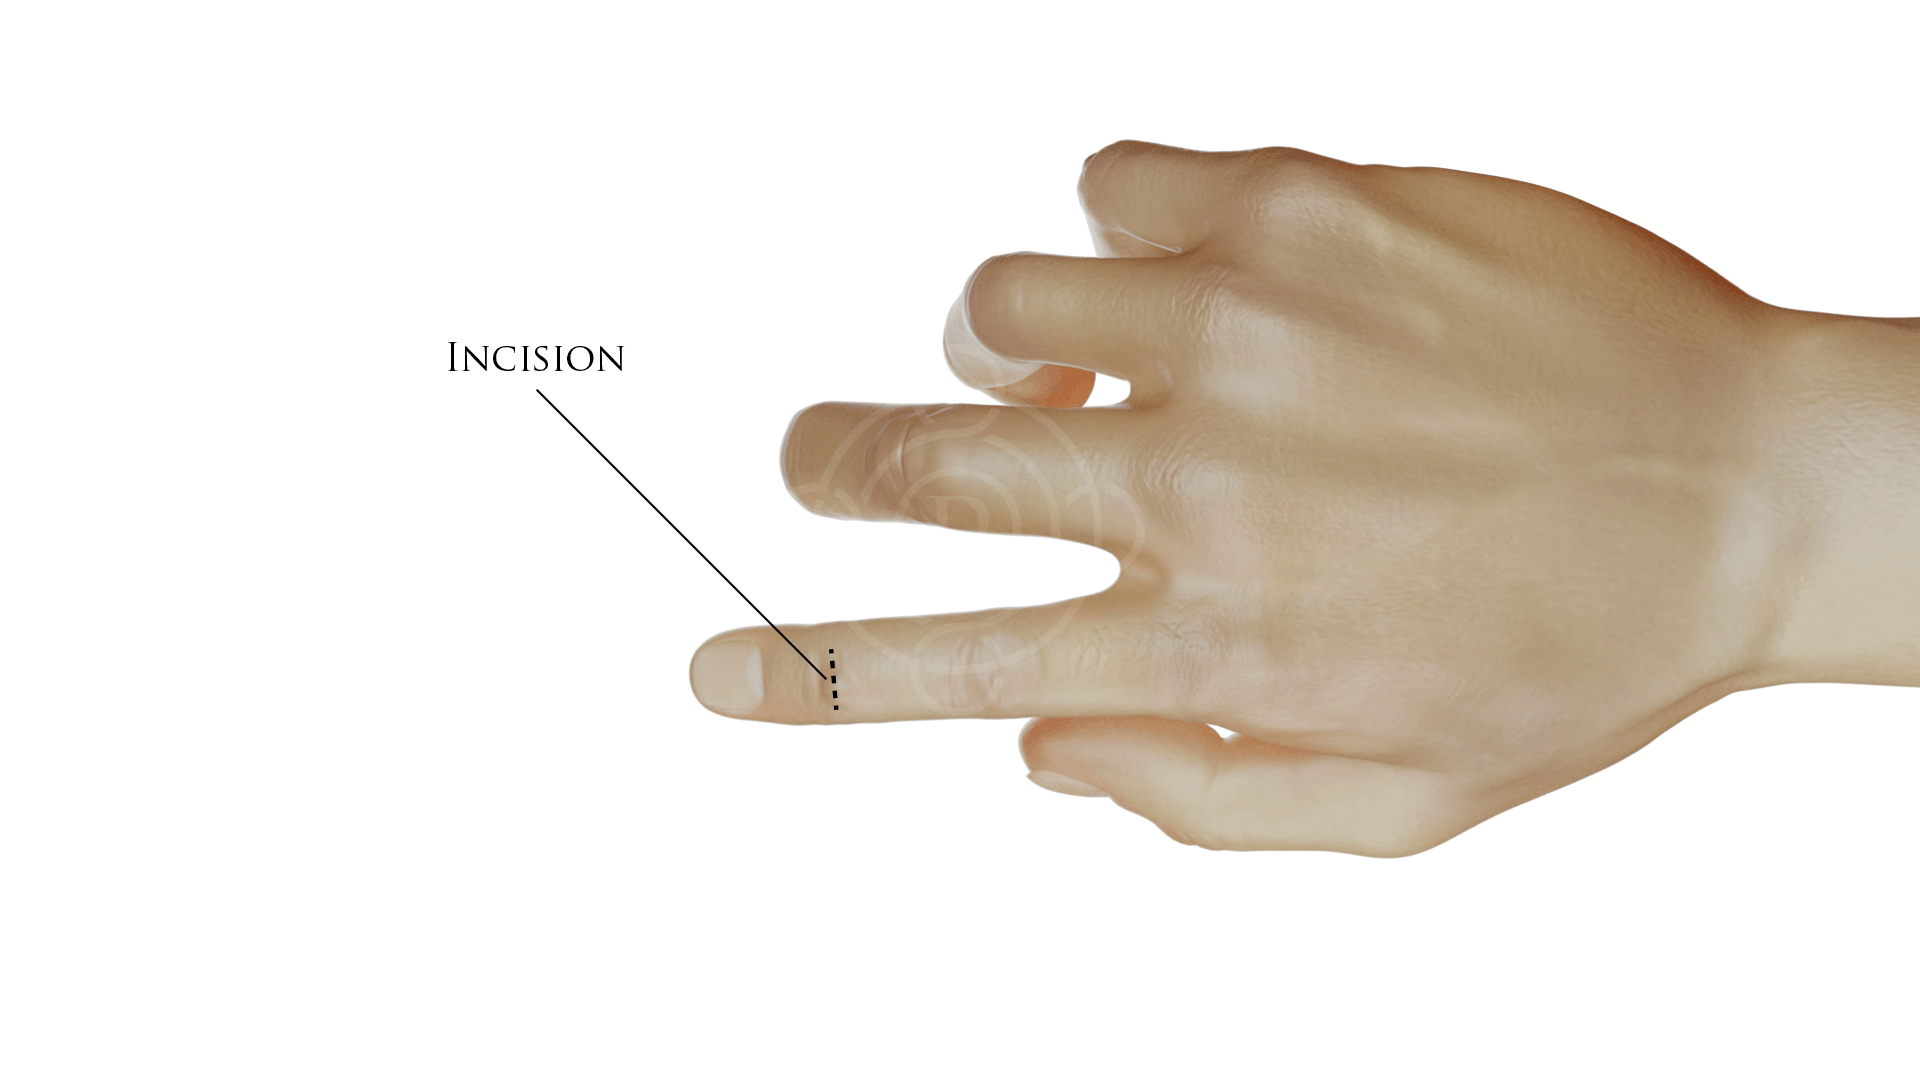 Finger procedure incision